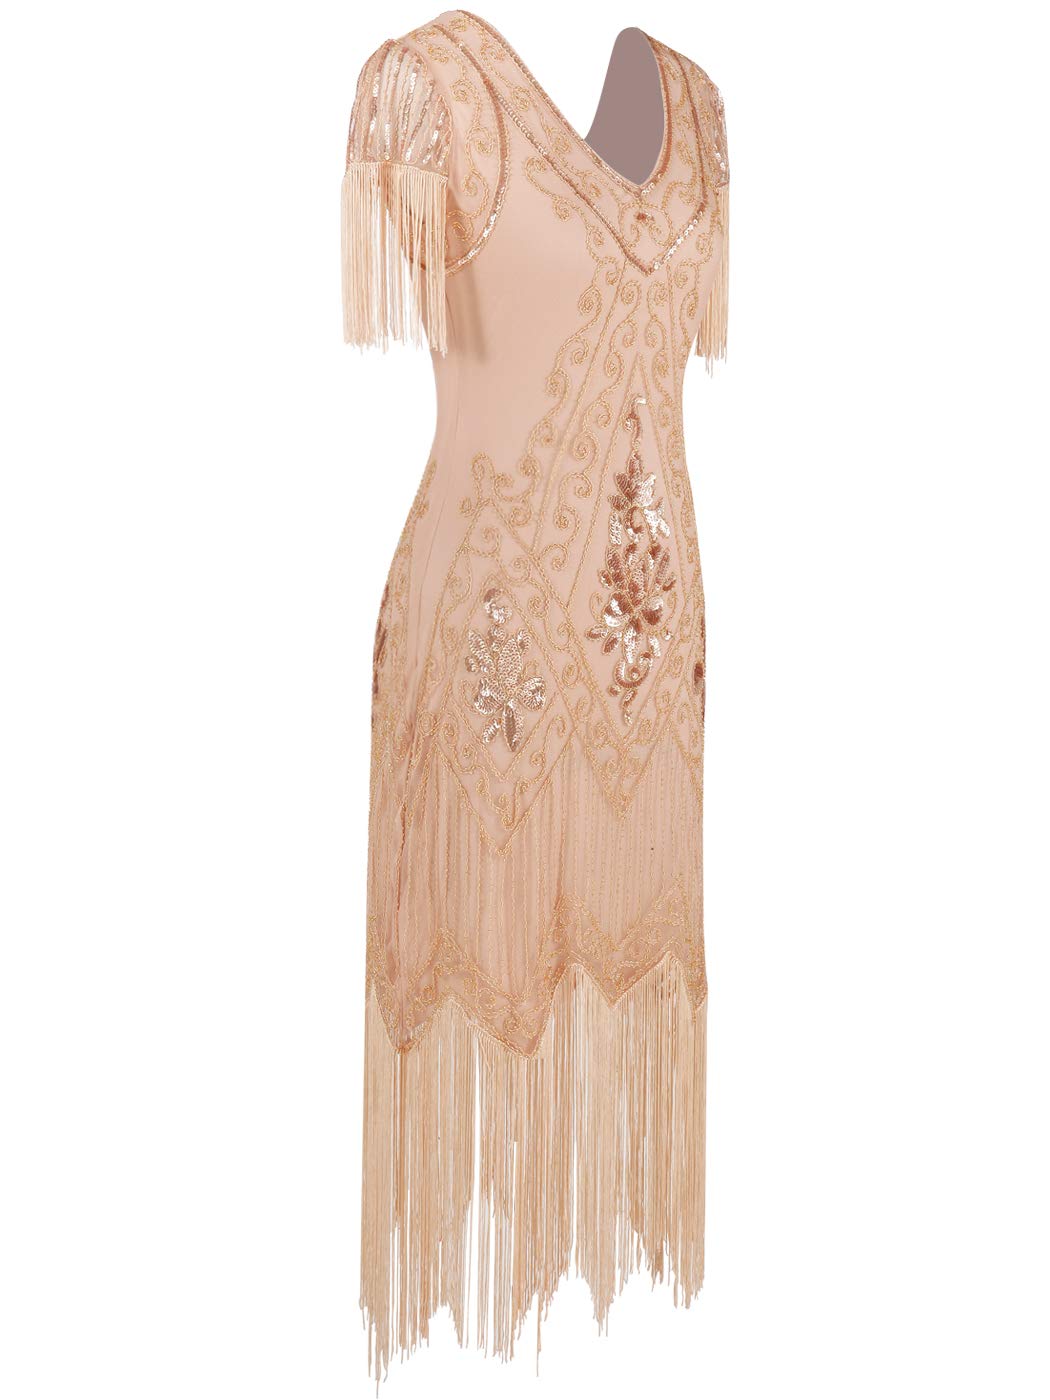 MISSCHEN Women's 1920s Art Deco Fringed Sequin Dress Gatsby Costume Dress with Sleeve YLS018